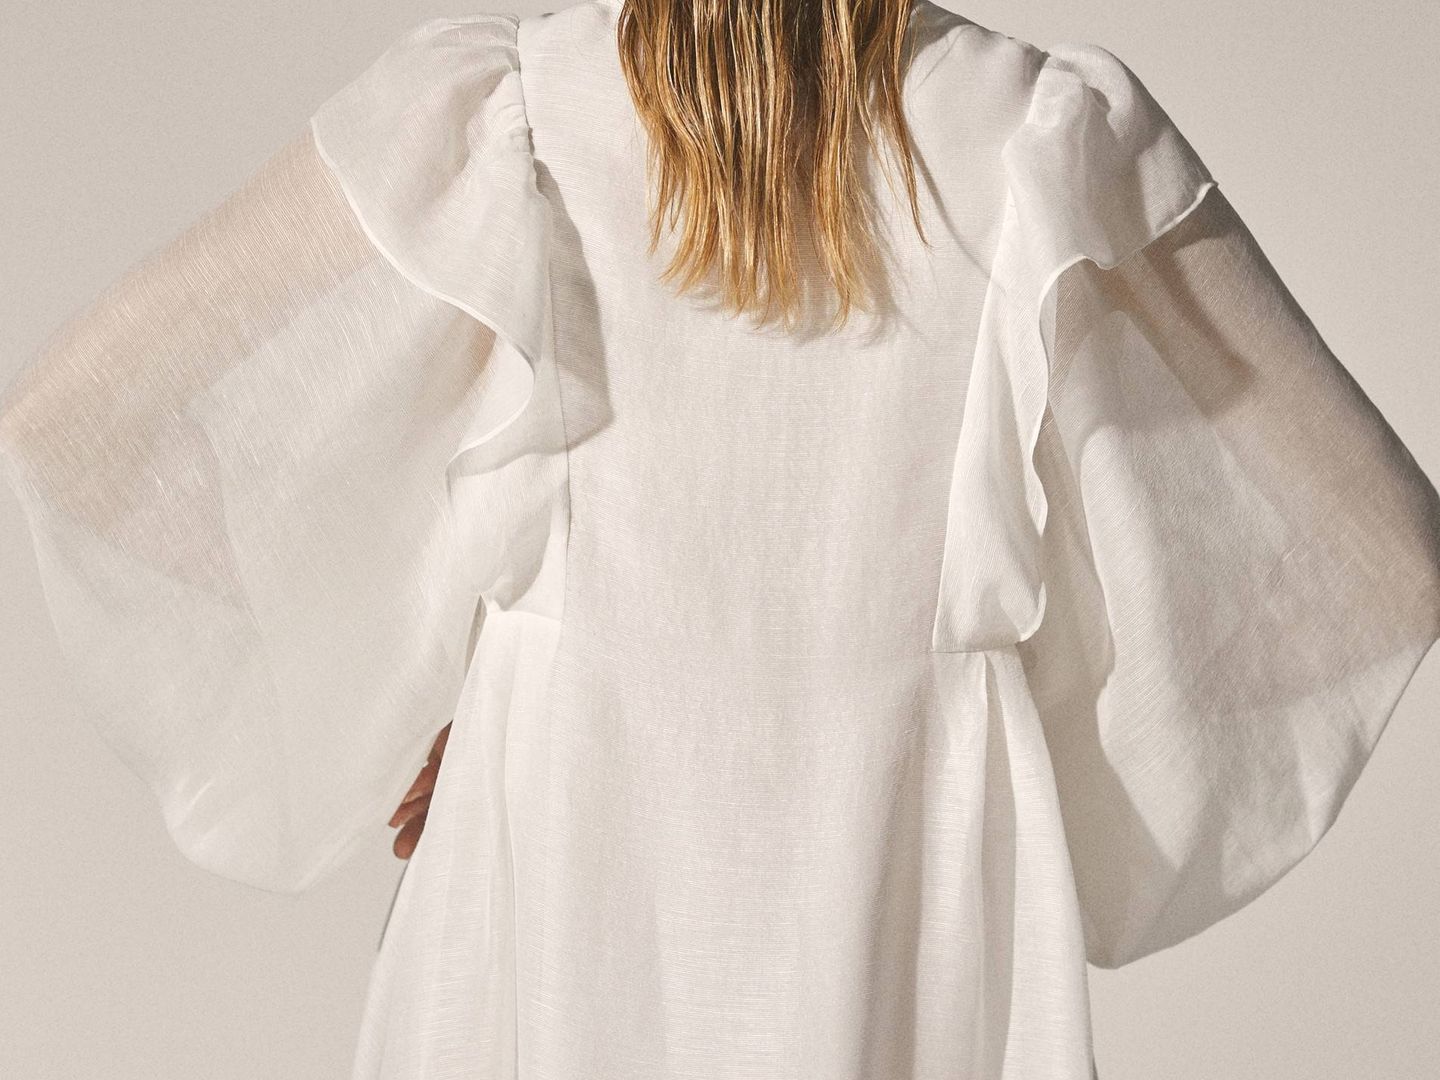 Vestido blanco de Massimo Dutti. (Cortesía)